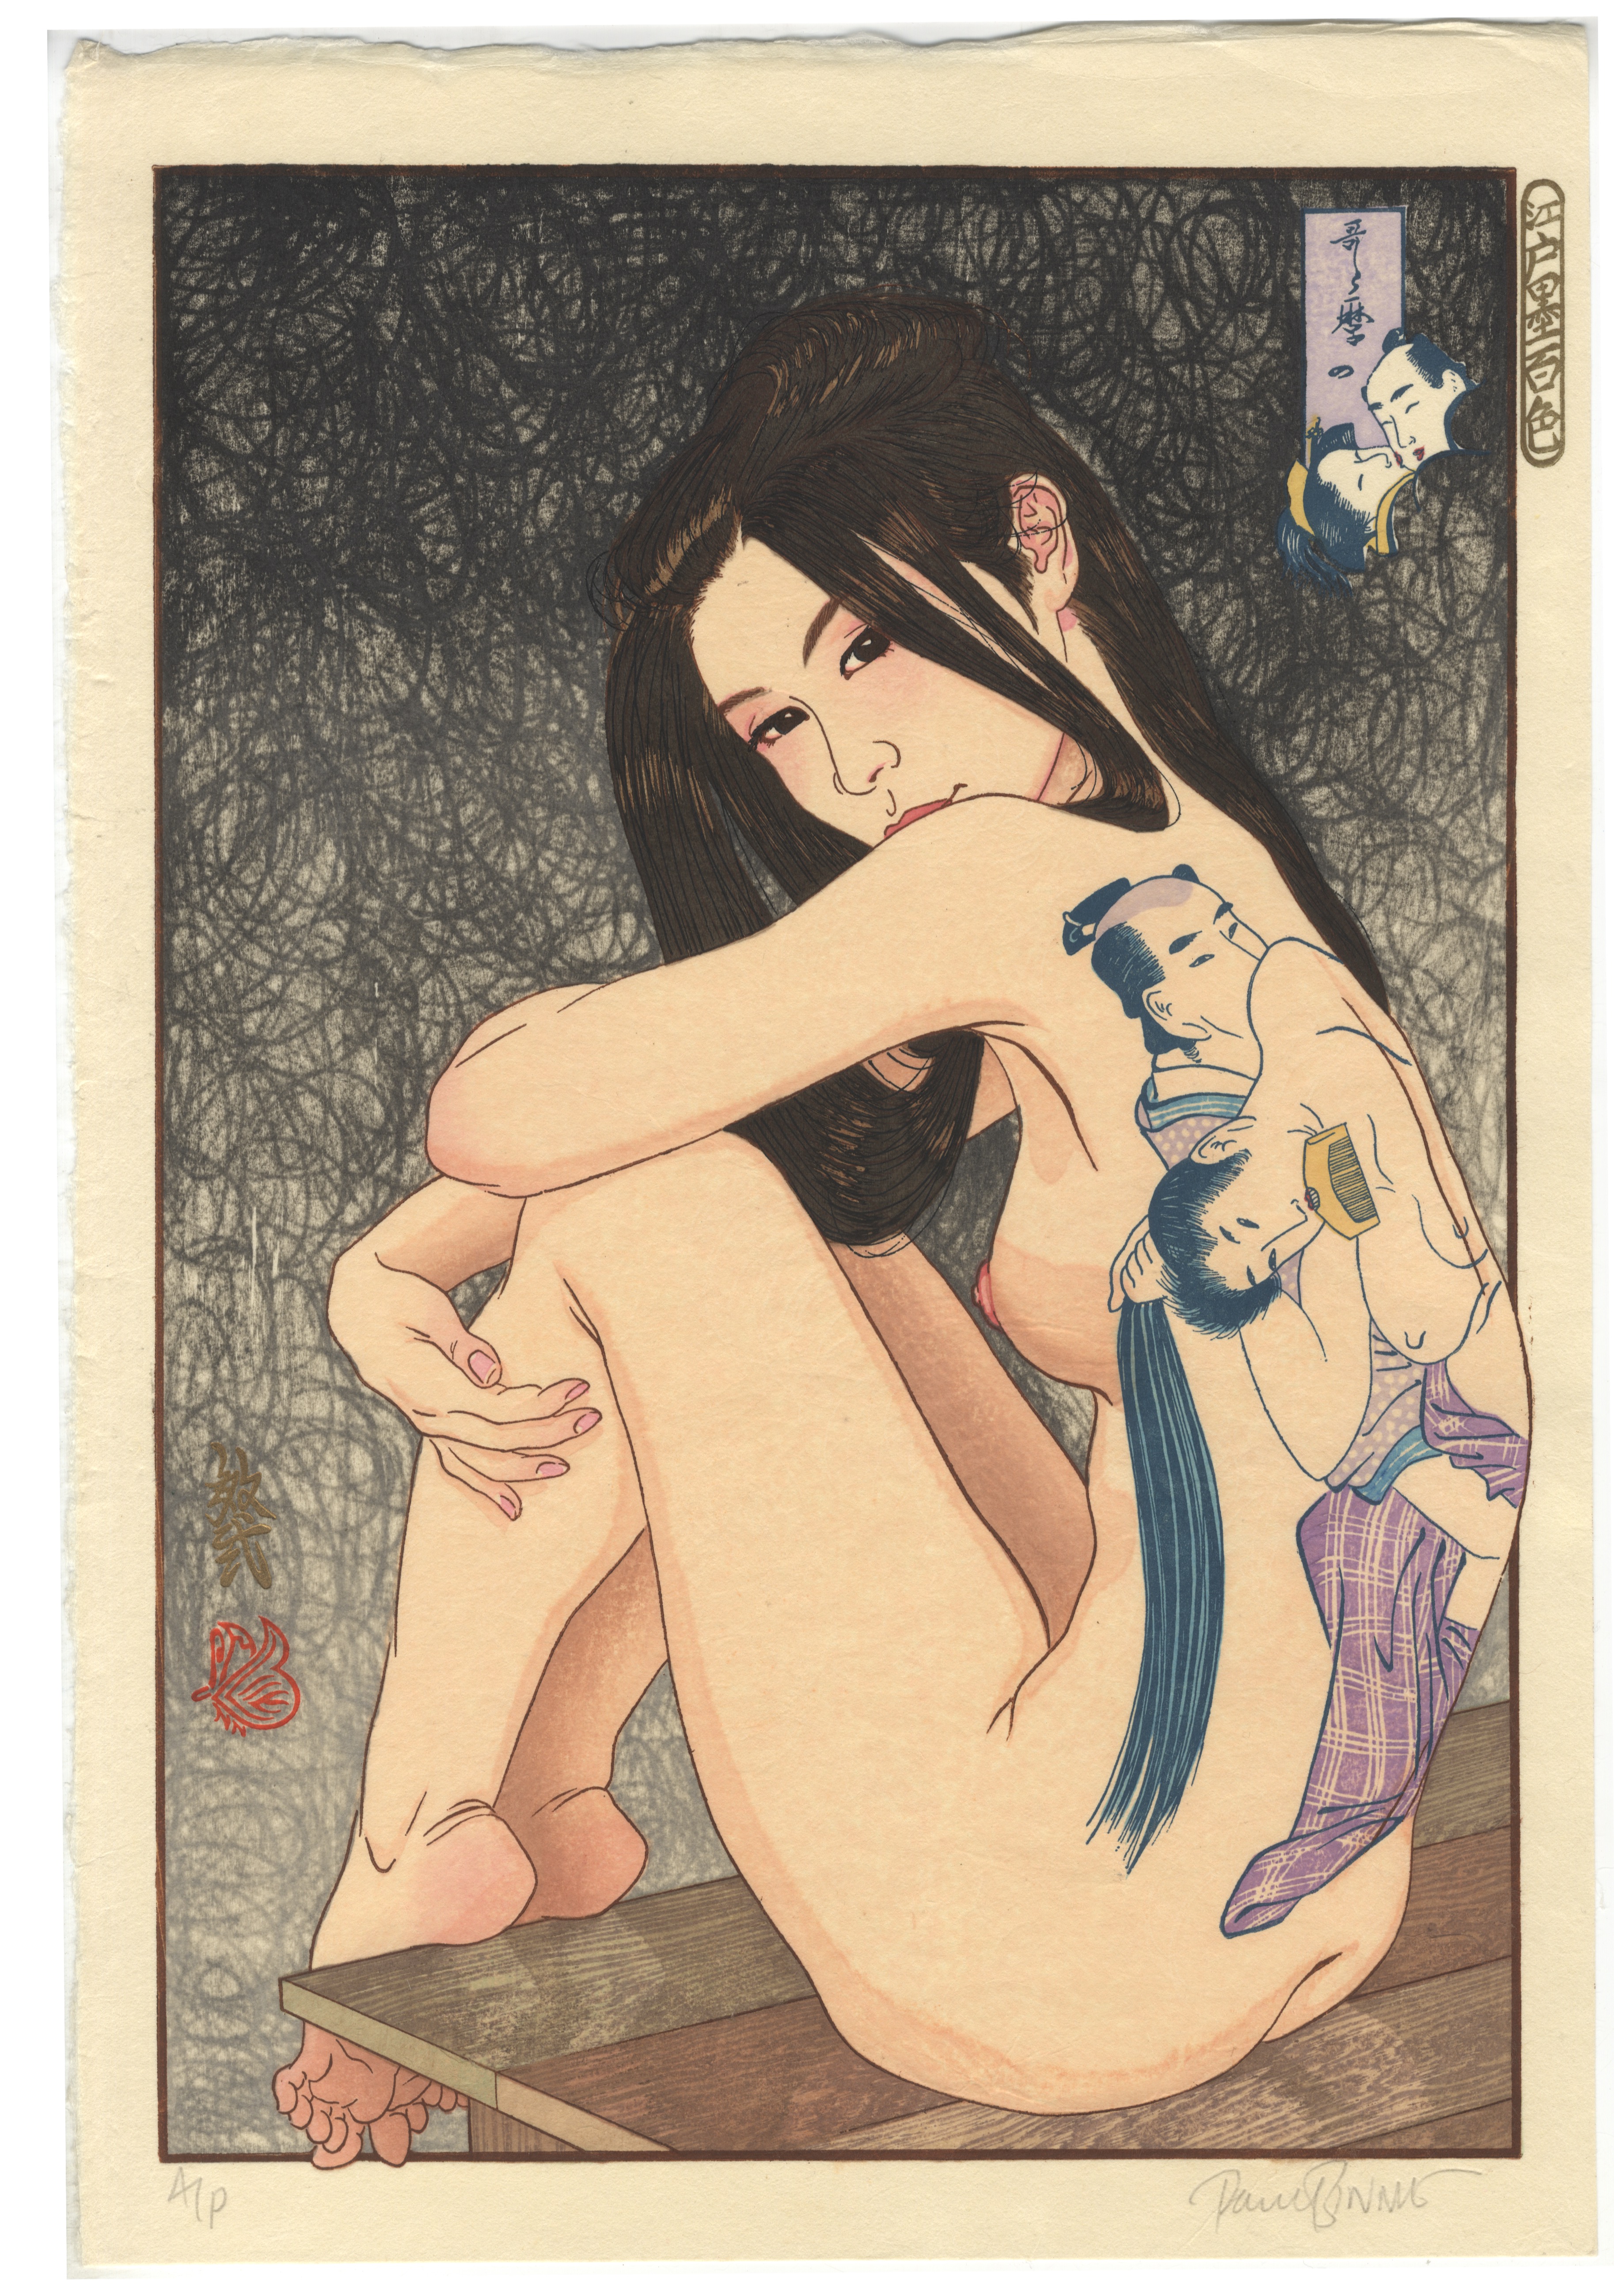 Paul Binnie, Utamaro's Erotica, Original Japanese Woodblock Print